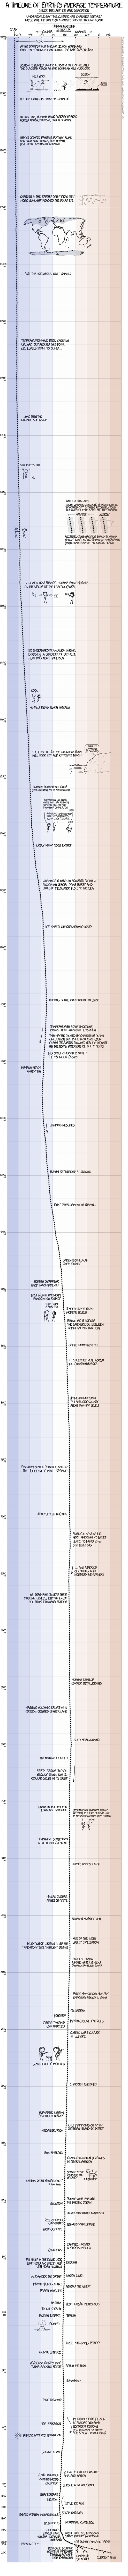 Global Warming Historical Chart